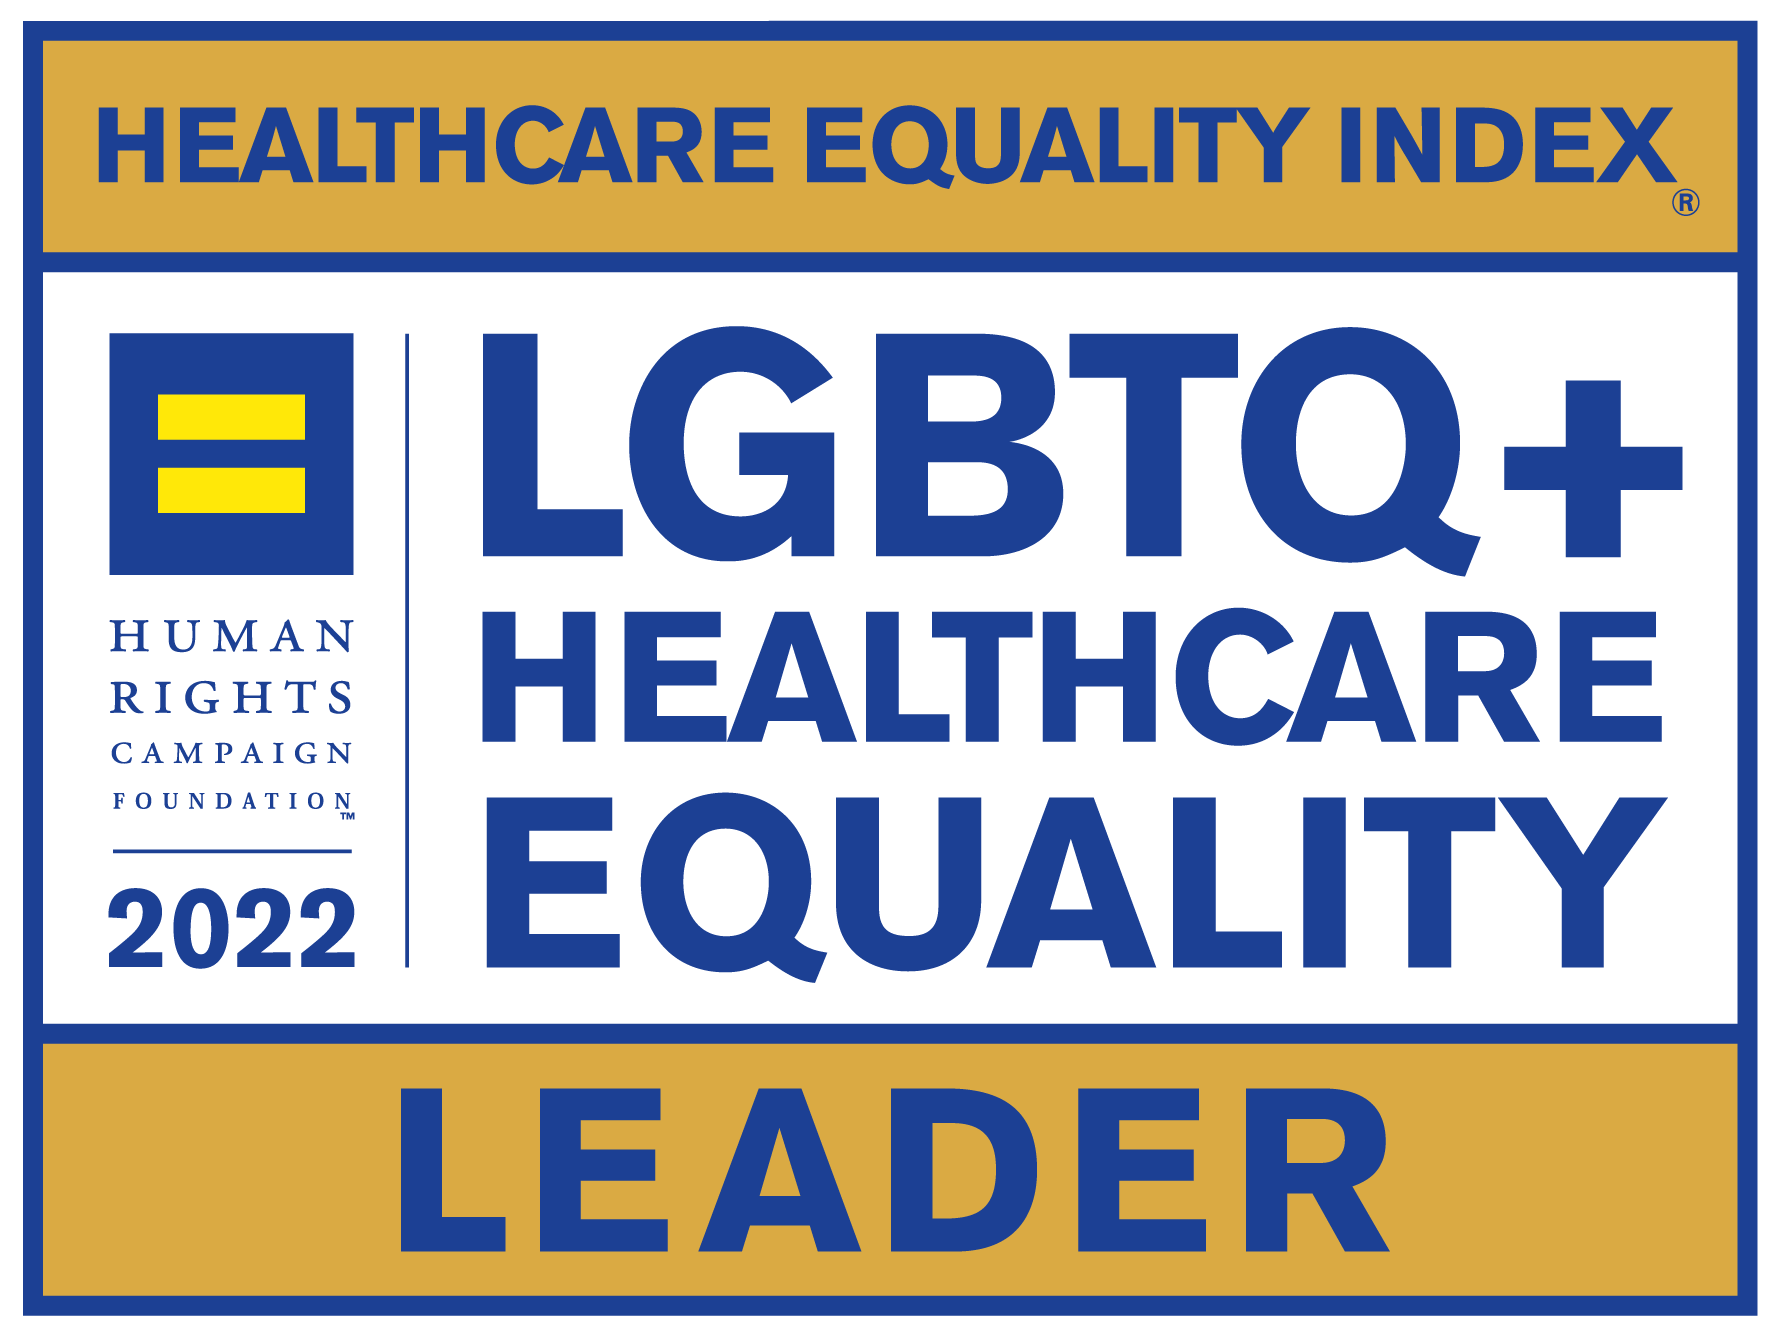 LGBTQ Healthcare Equality Badge 2022